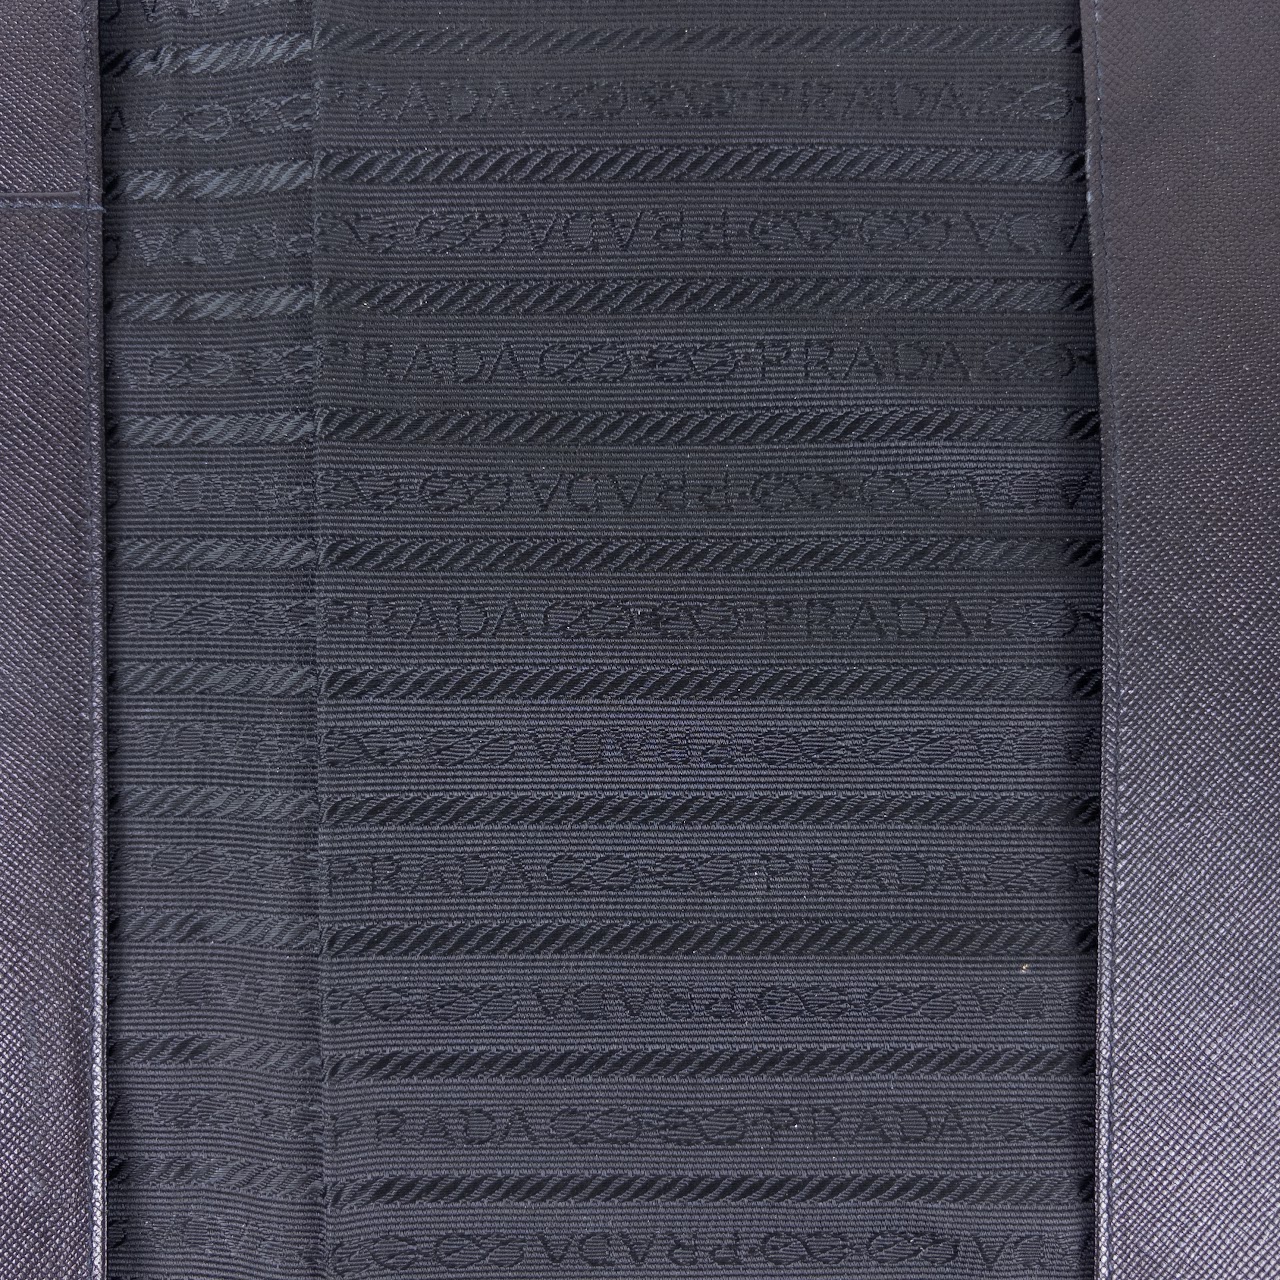 Prada Saffiano Leather Notepad Holder